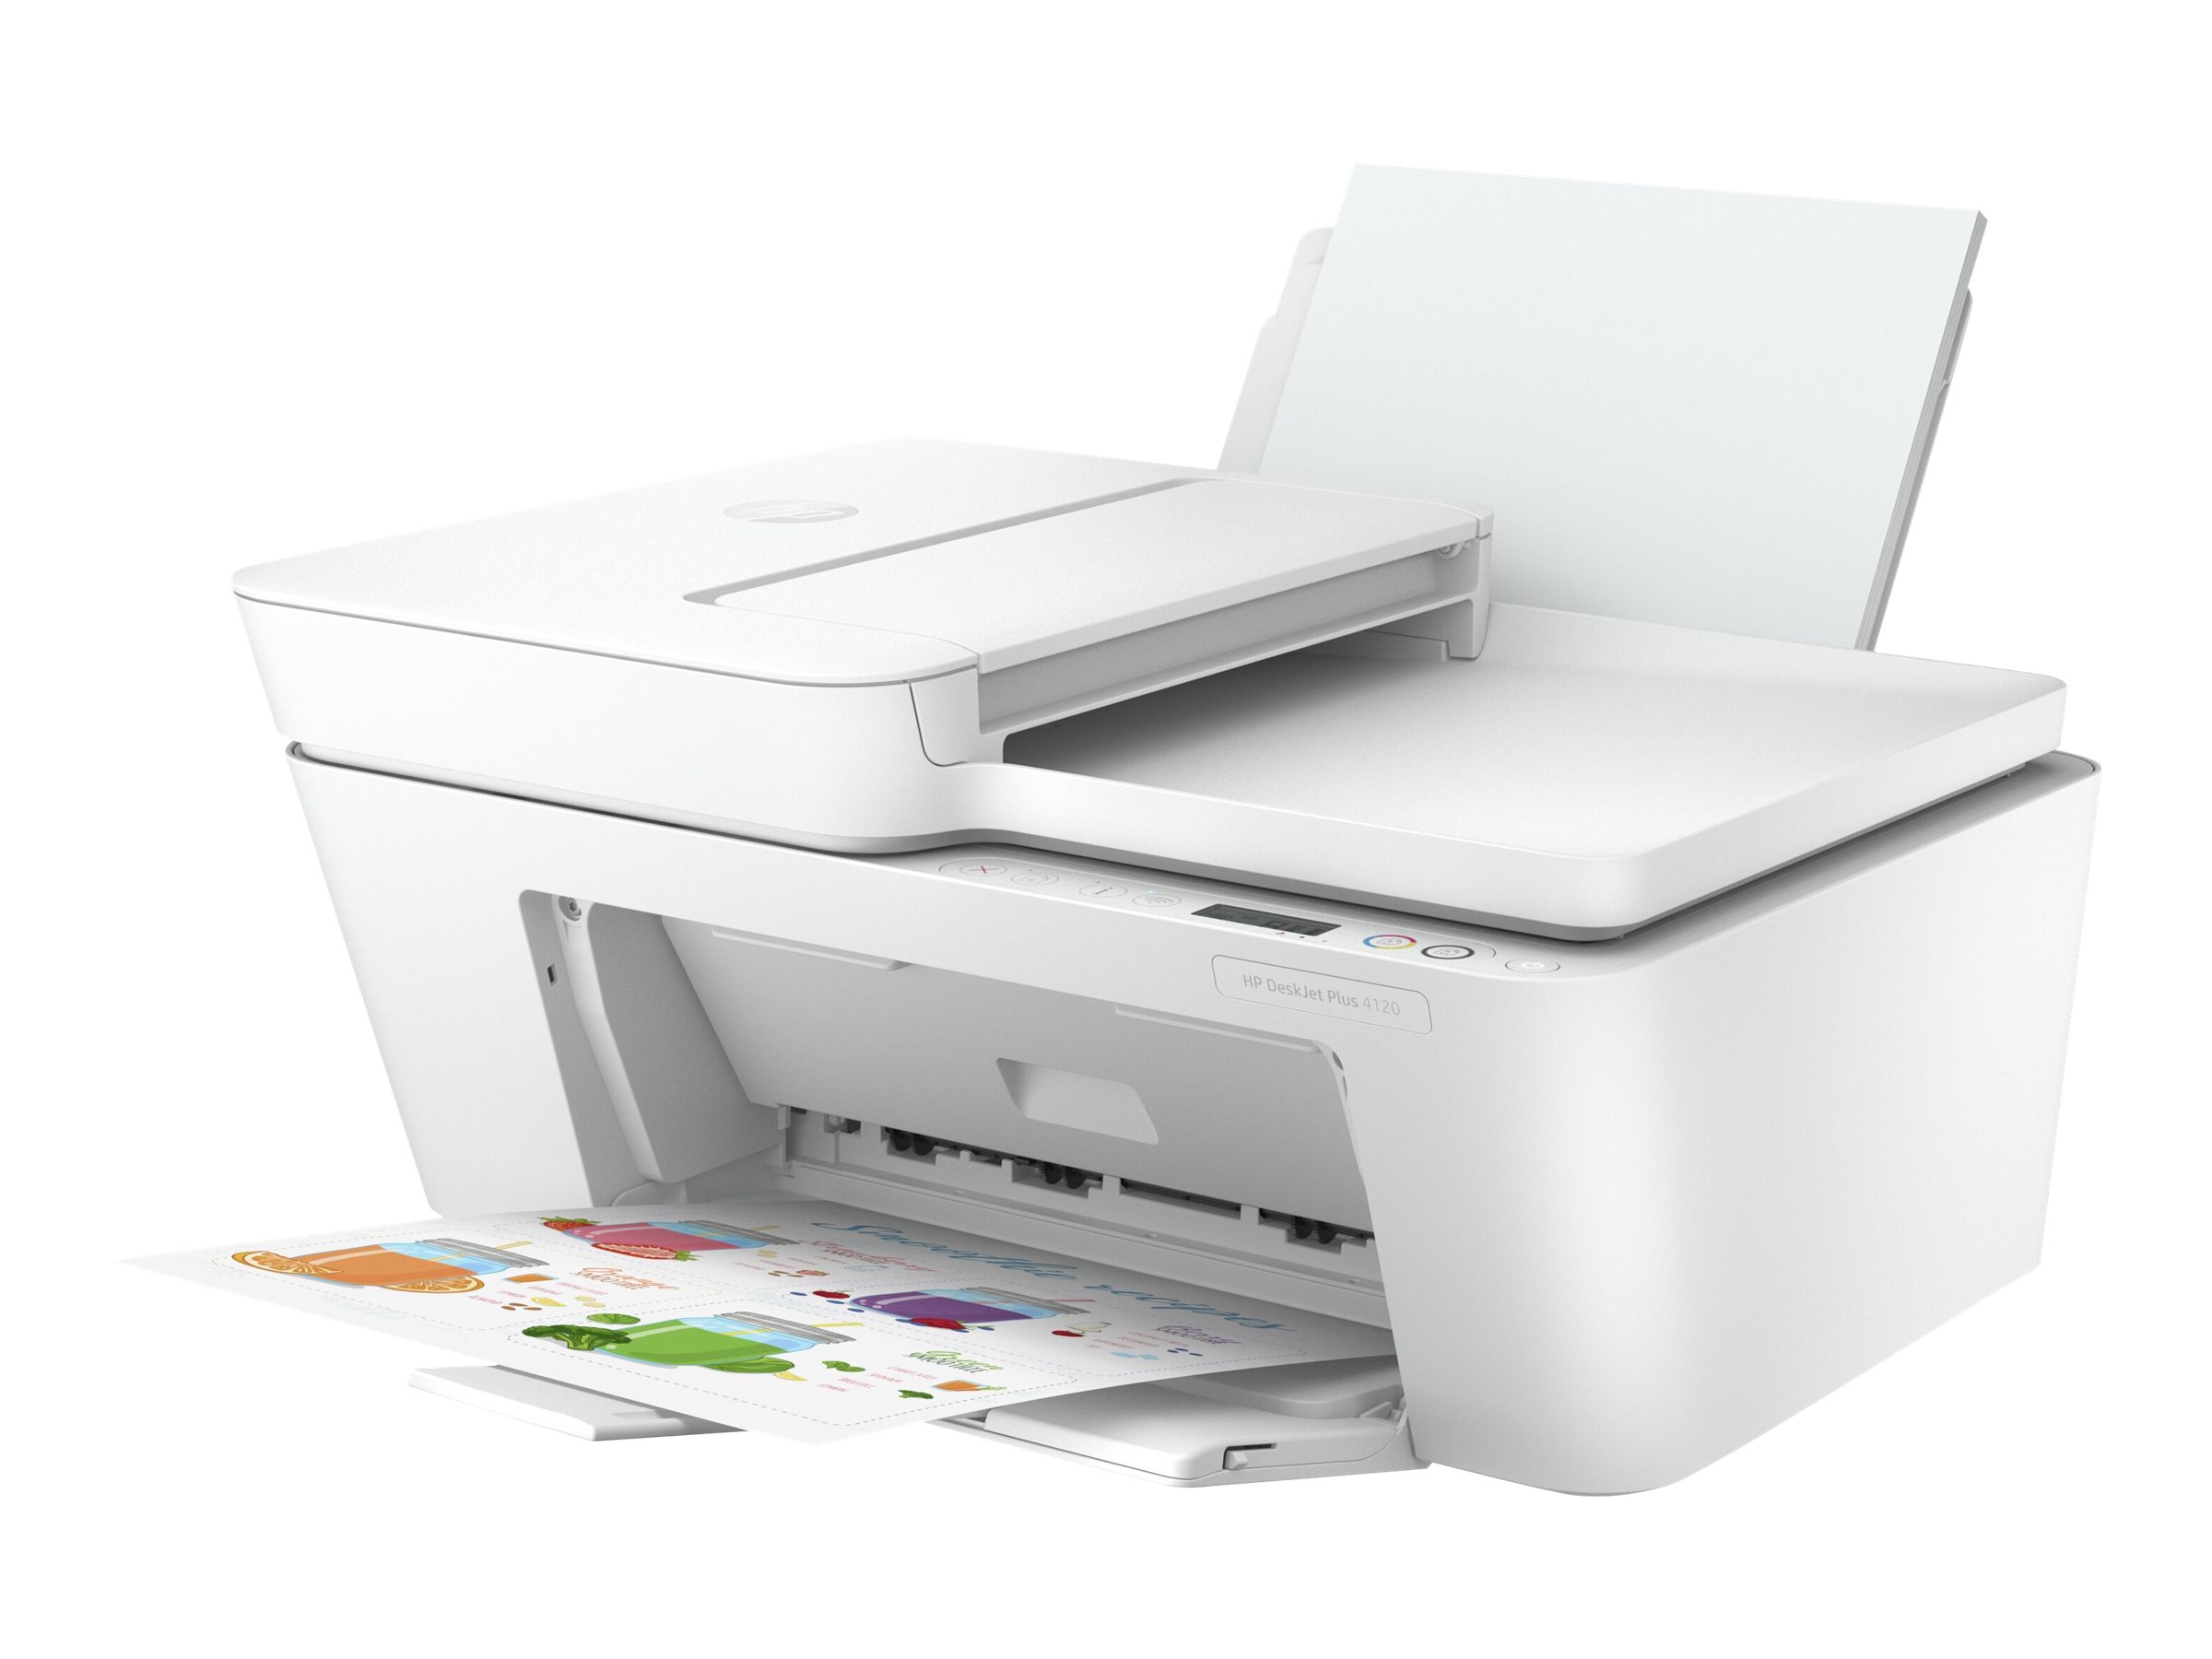 HP DeskJet Plus 4120 All-in-One -  imprimante multifonctions jet d'encre couleur A4 - Wifi, USB